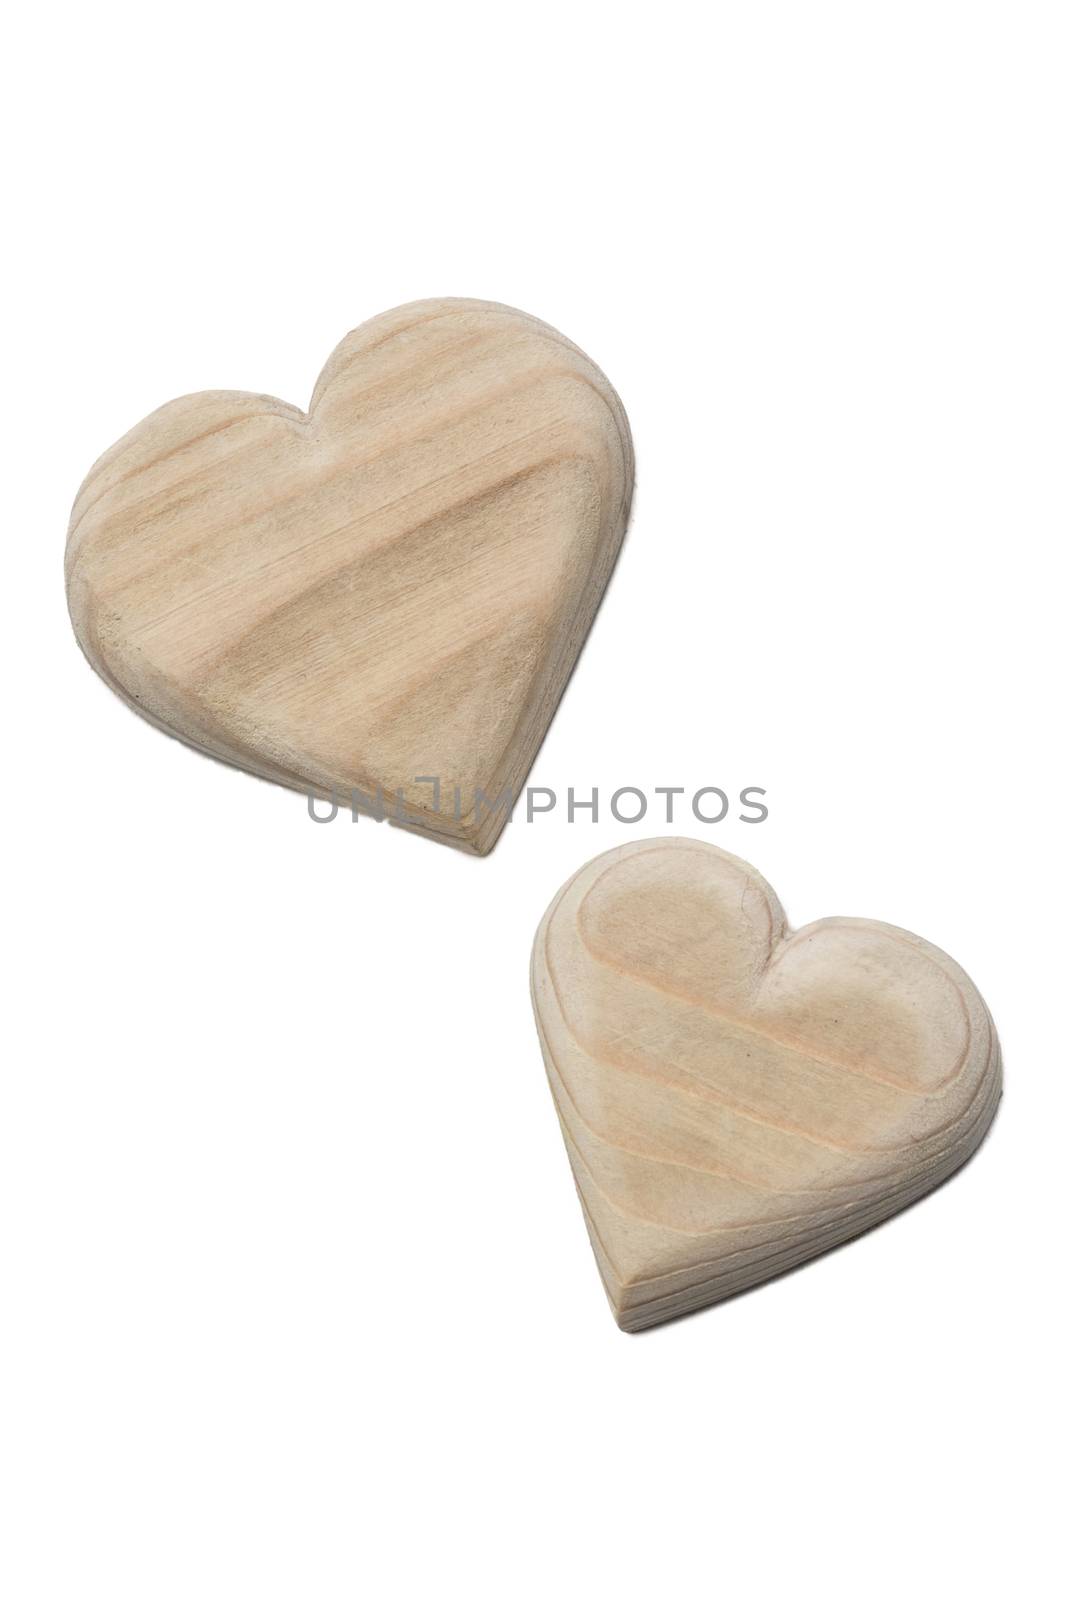 wooden hearts handmade  by LMykola